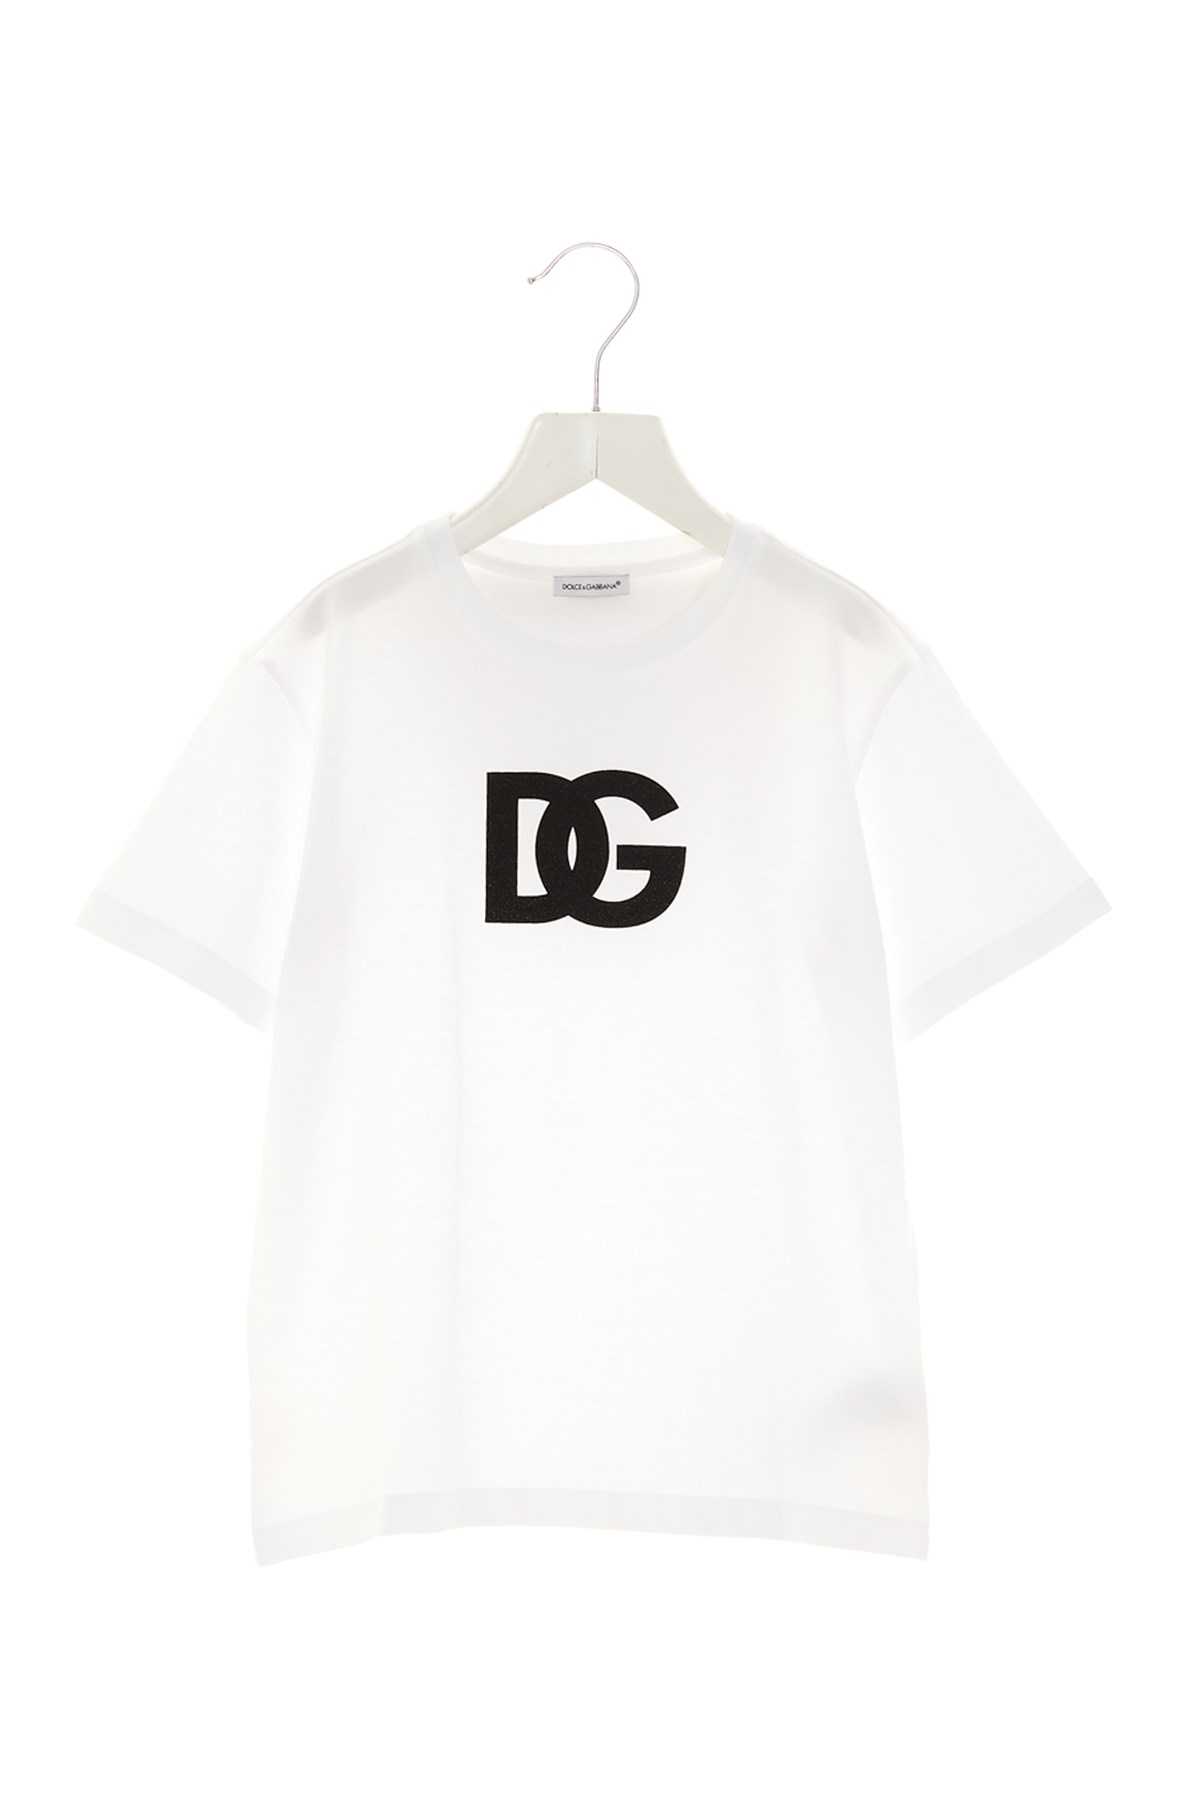 DOLCE & GABBANA ‘Dg’ T-Shirt